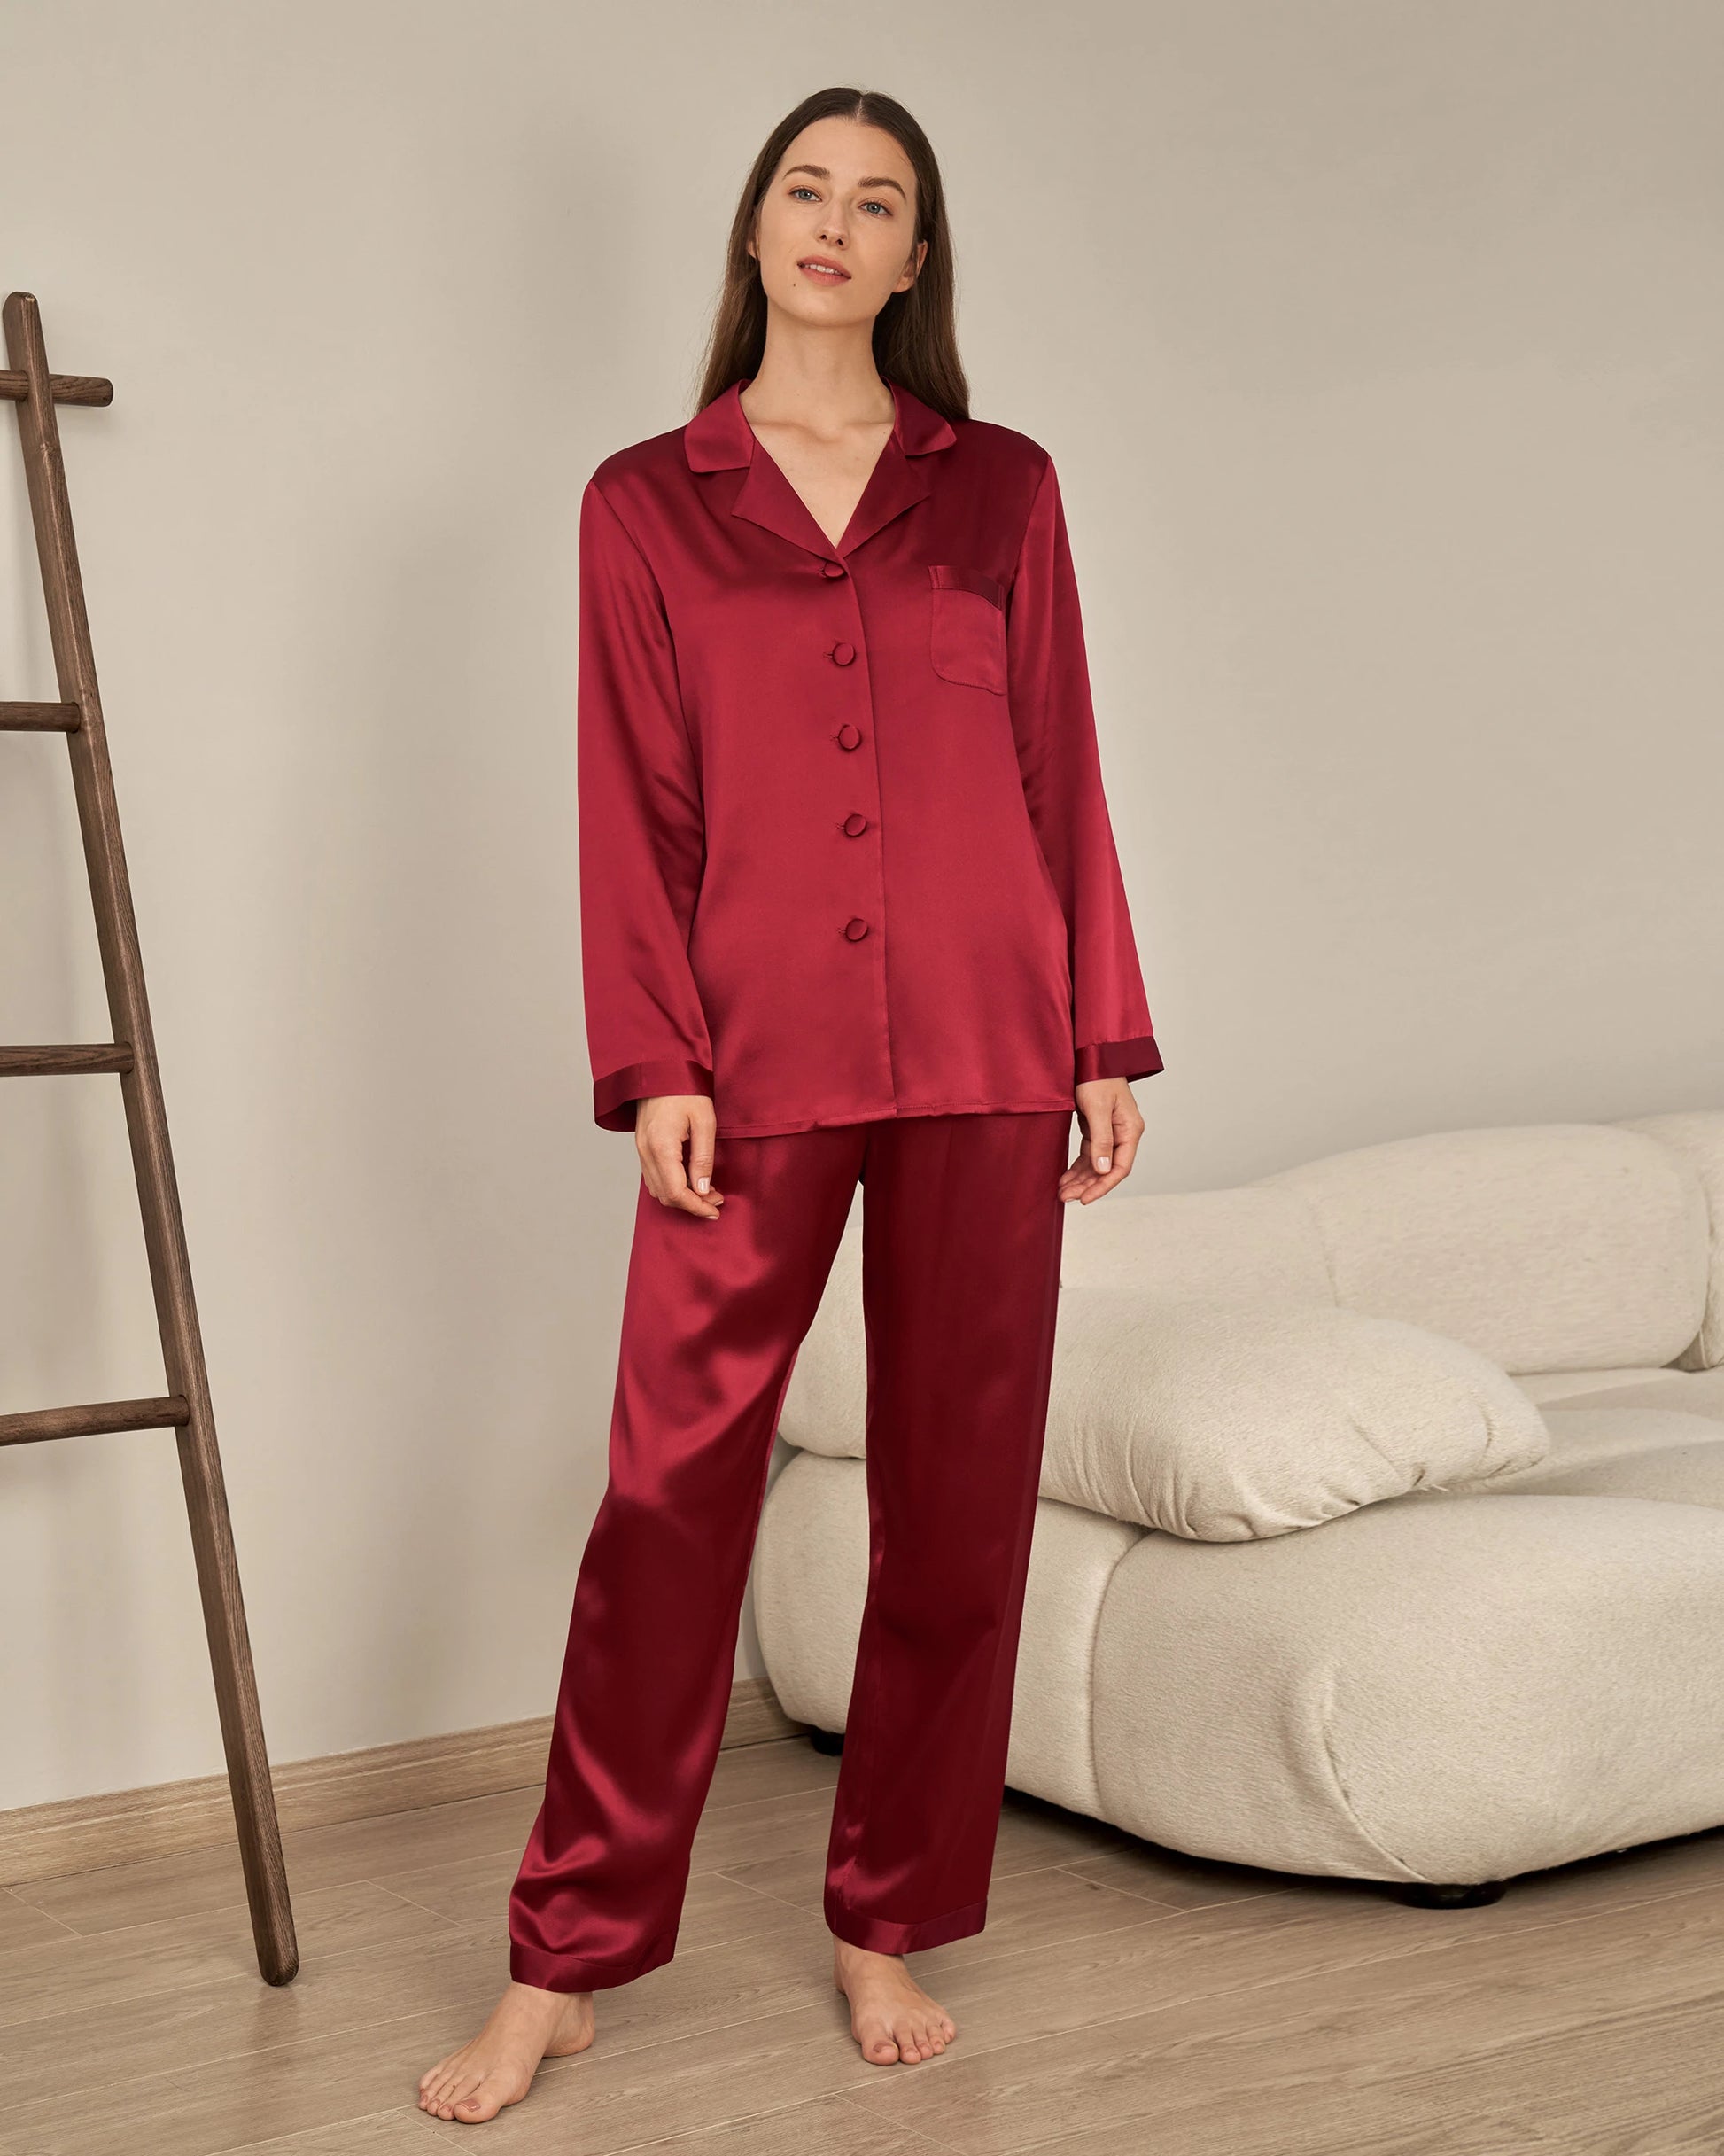 Silky Satin Pjs - Bella Babe by SK Nightsuit Nightdress Robes Silk Satin Nighty Gown Nightwear 